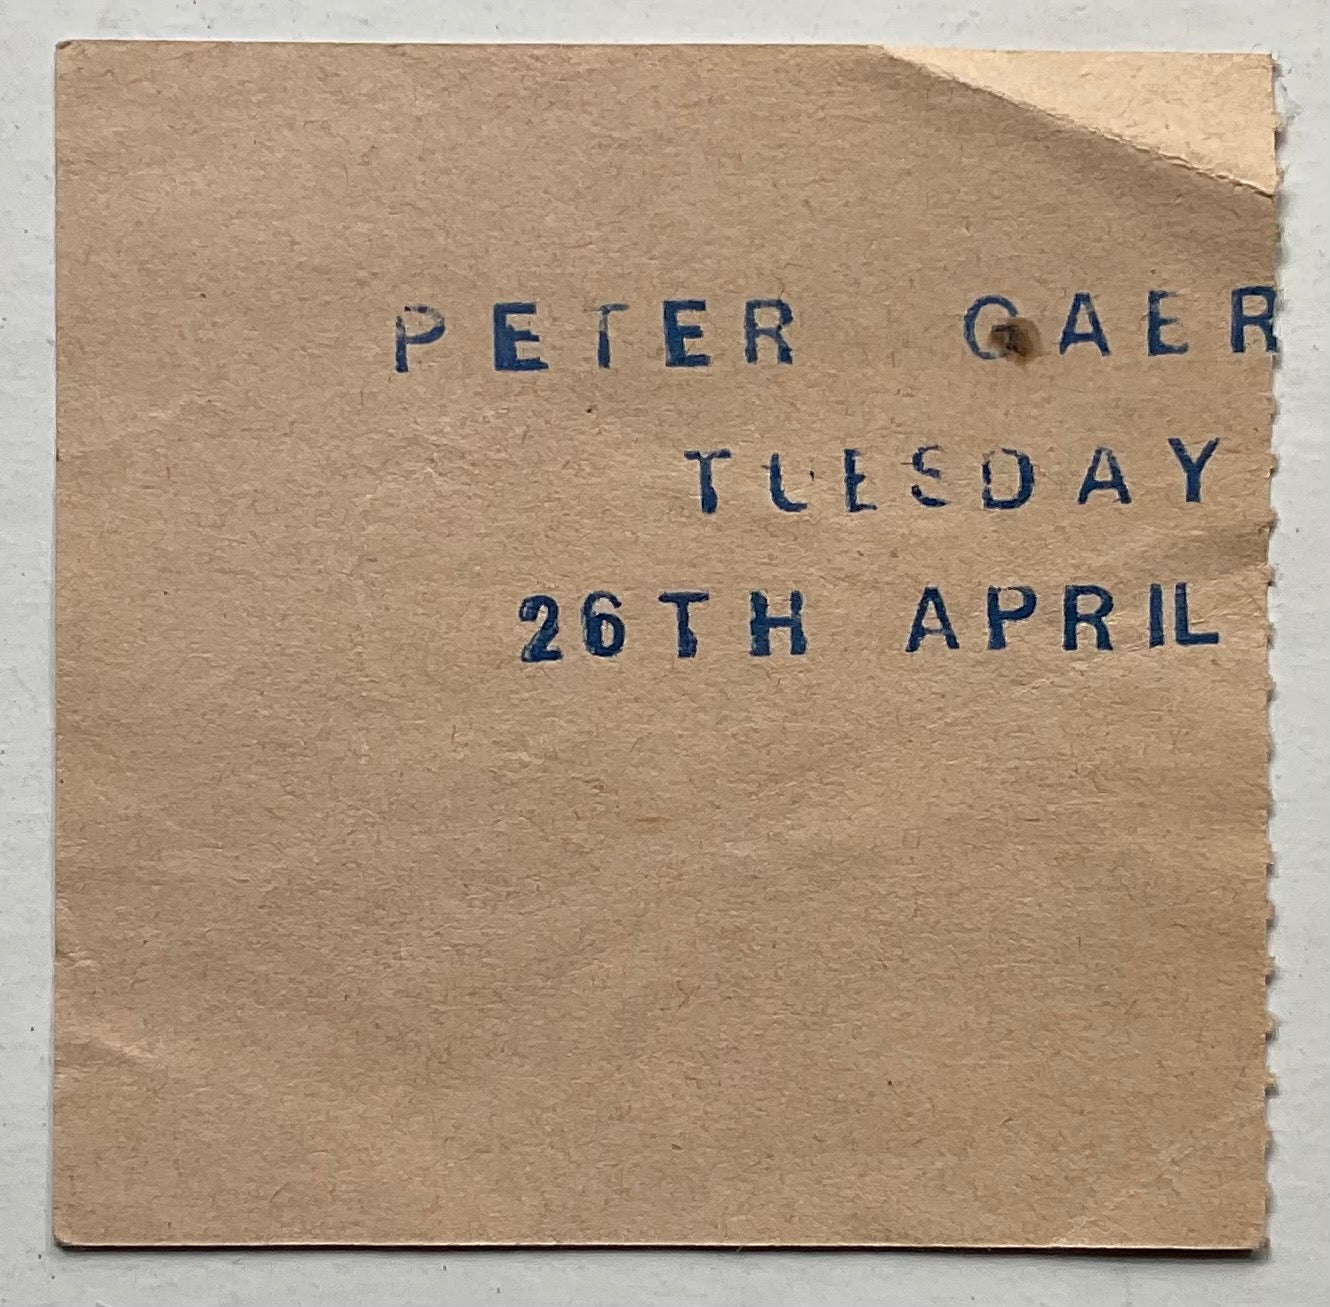 Genesis Peter Gabriel Original Used Concert Ticket Hammersmith Odeon London 26th Apr 1977